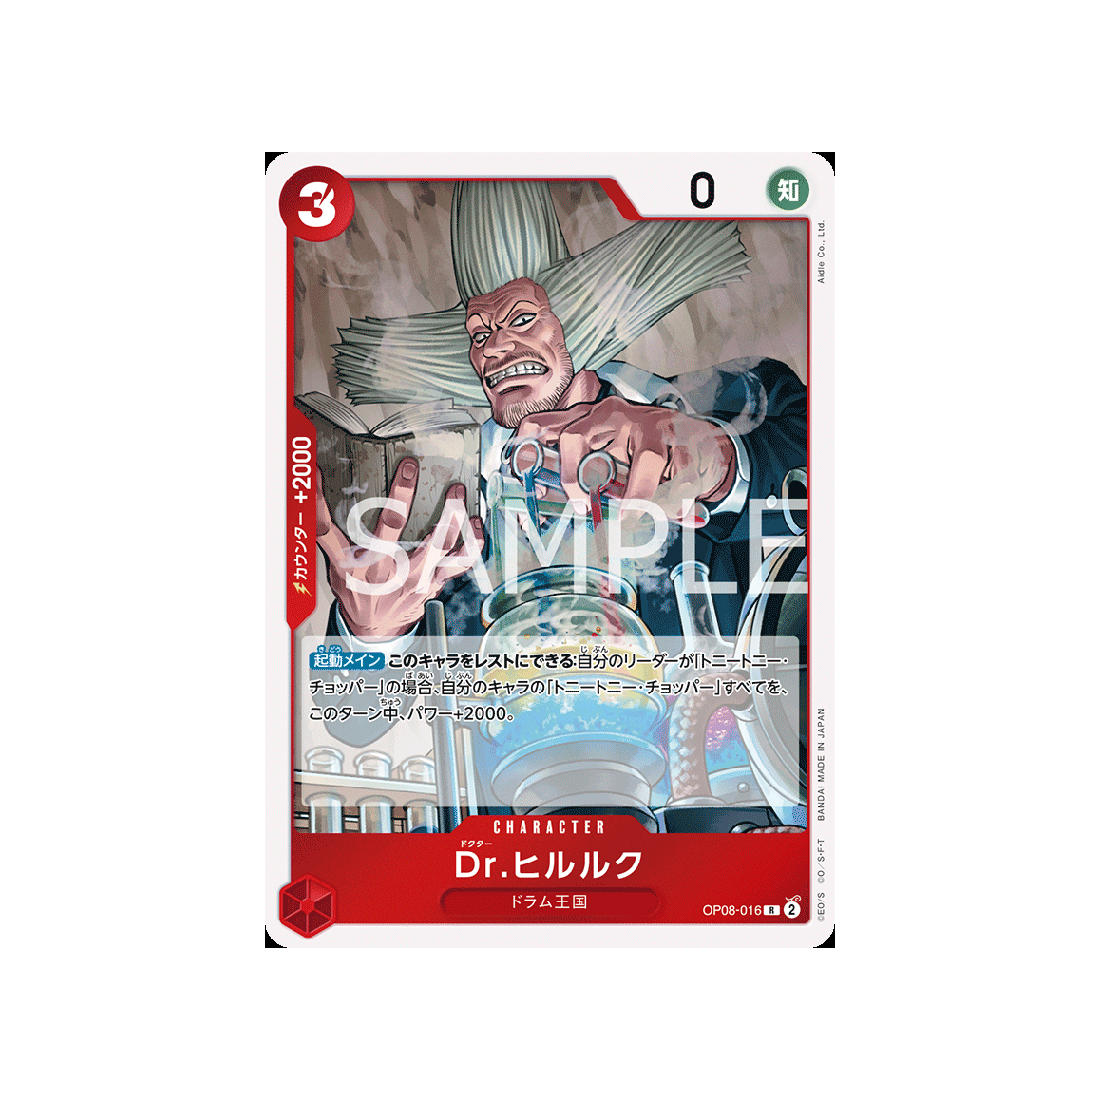 carte-one-piece-card-two-legends-op08-016-dr.hiriluk-r-